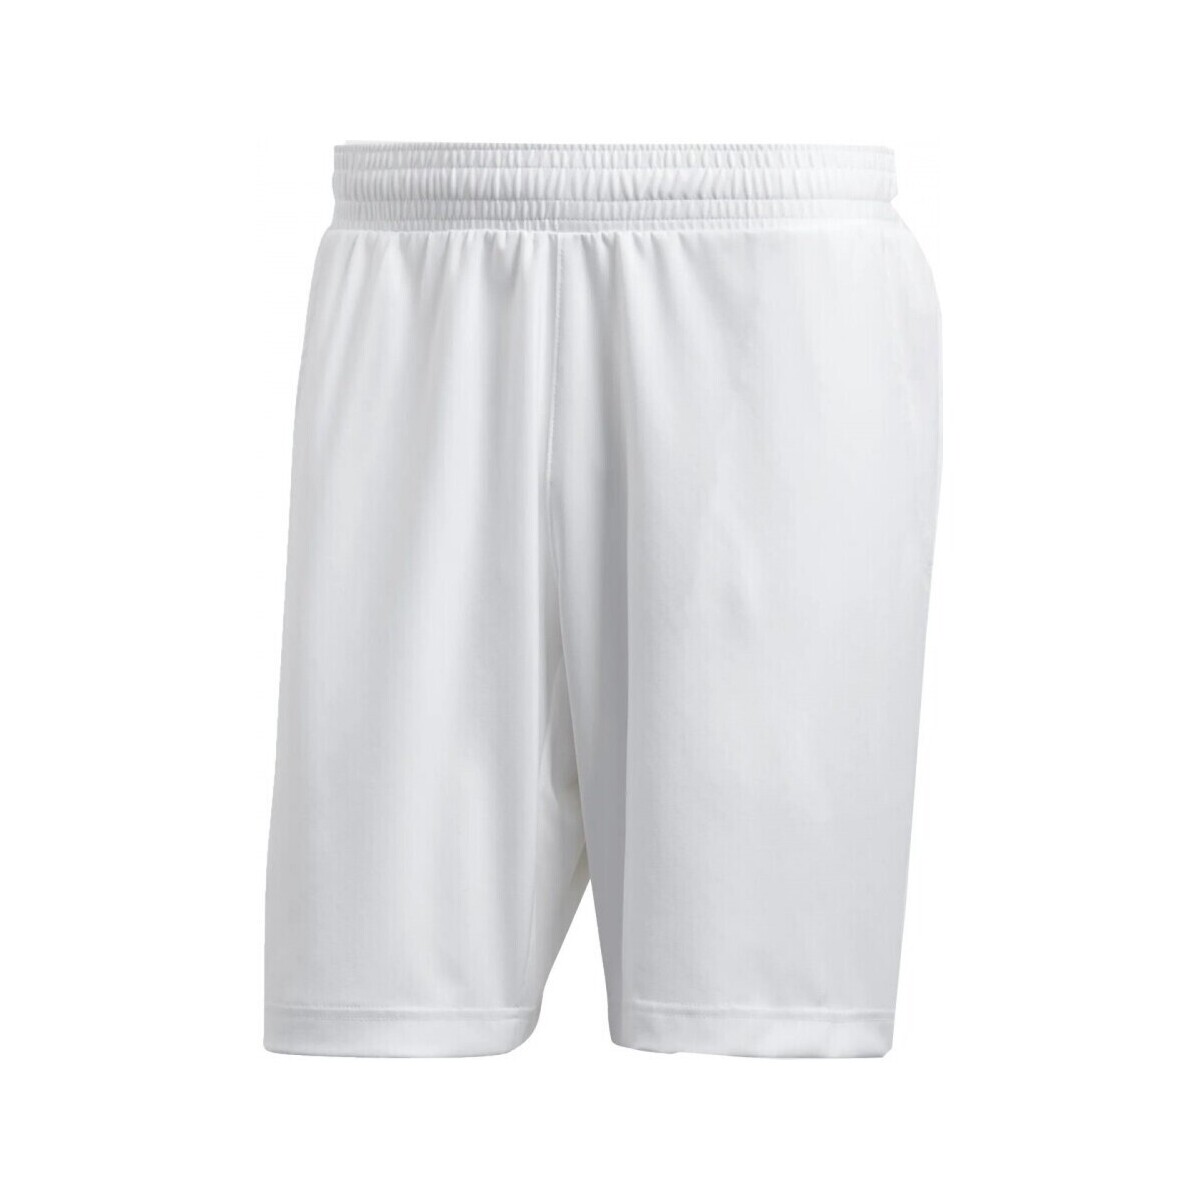 Vêtements Homme Shorts / Bermudas adidas Originals Short Pblue Blanc